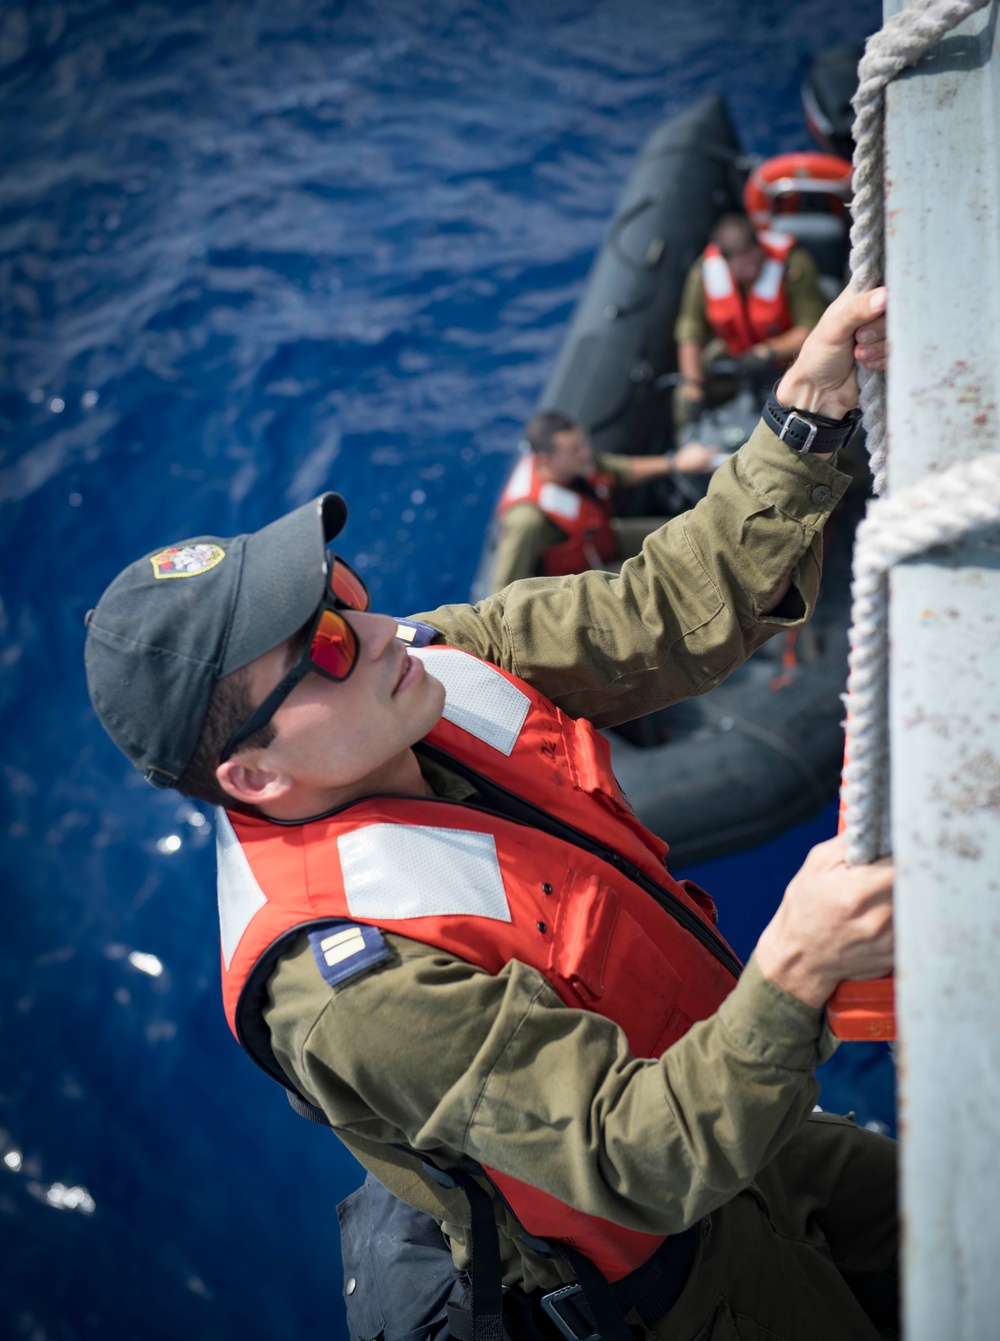 USS Carney Participates in Exercise Reliant Mermaid 2018